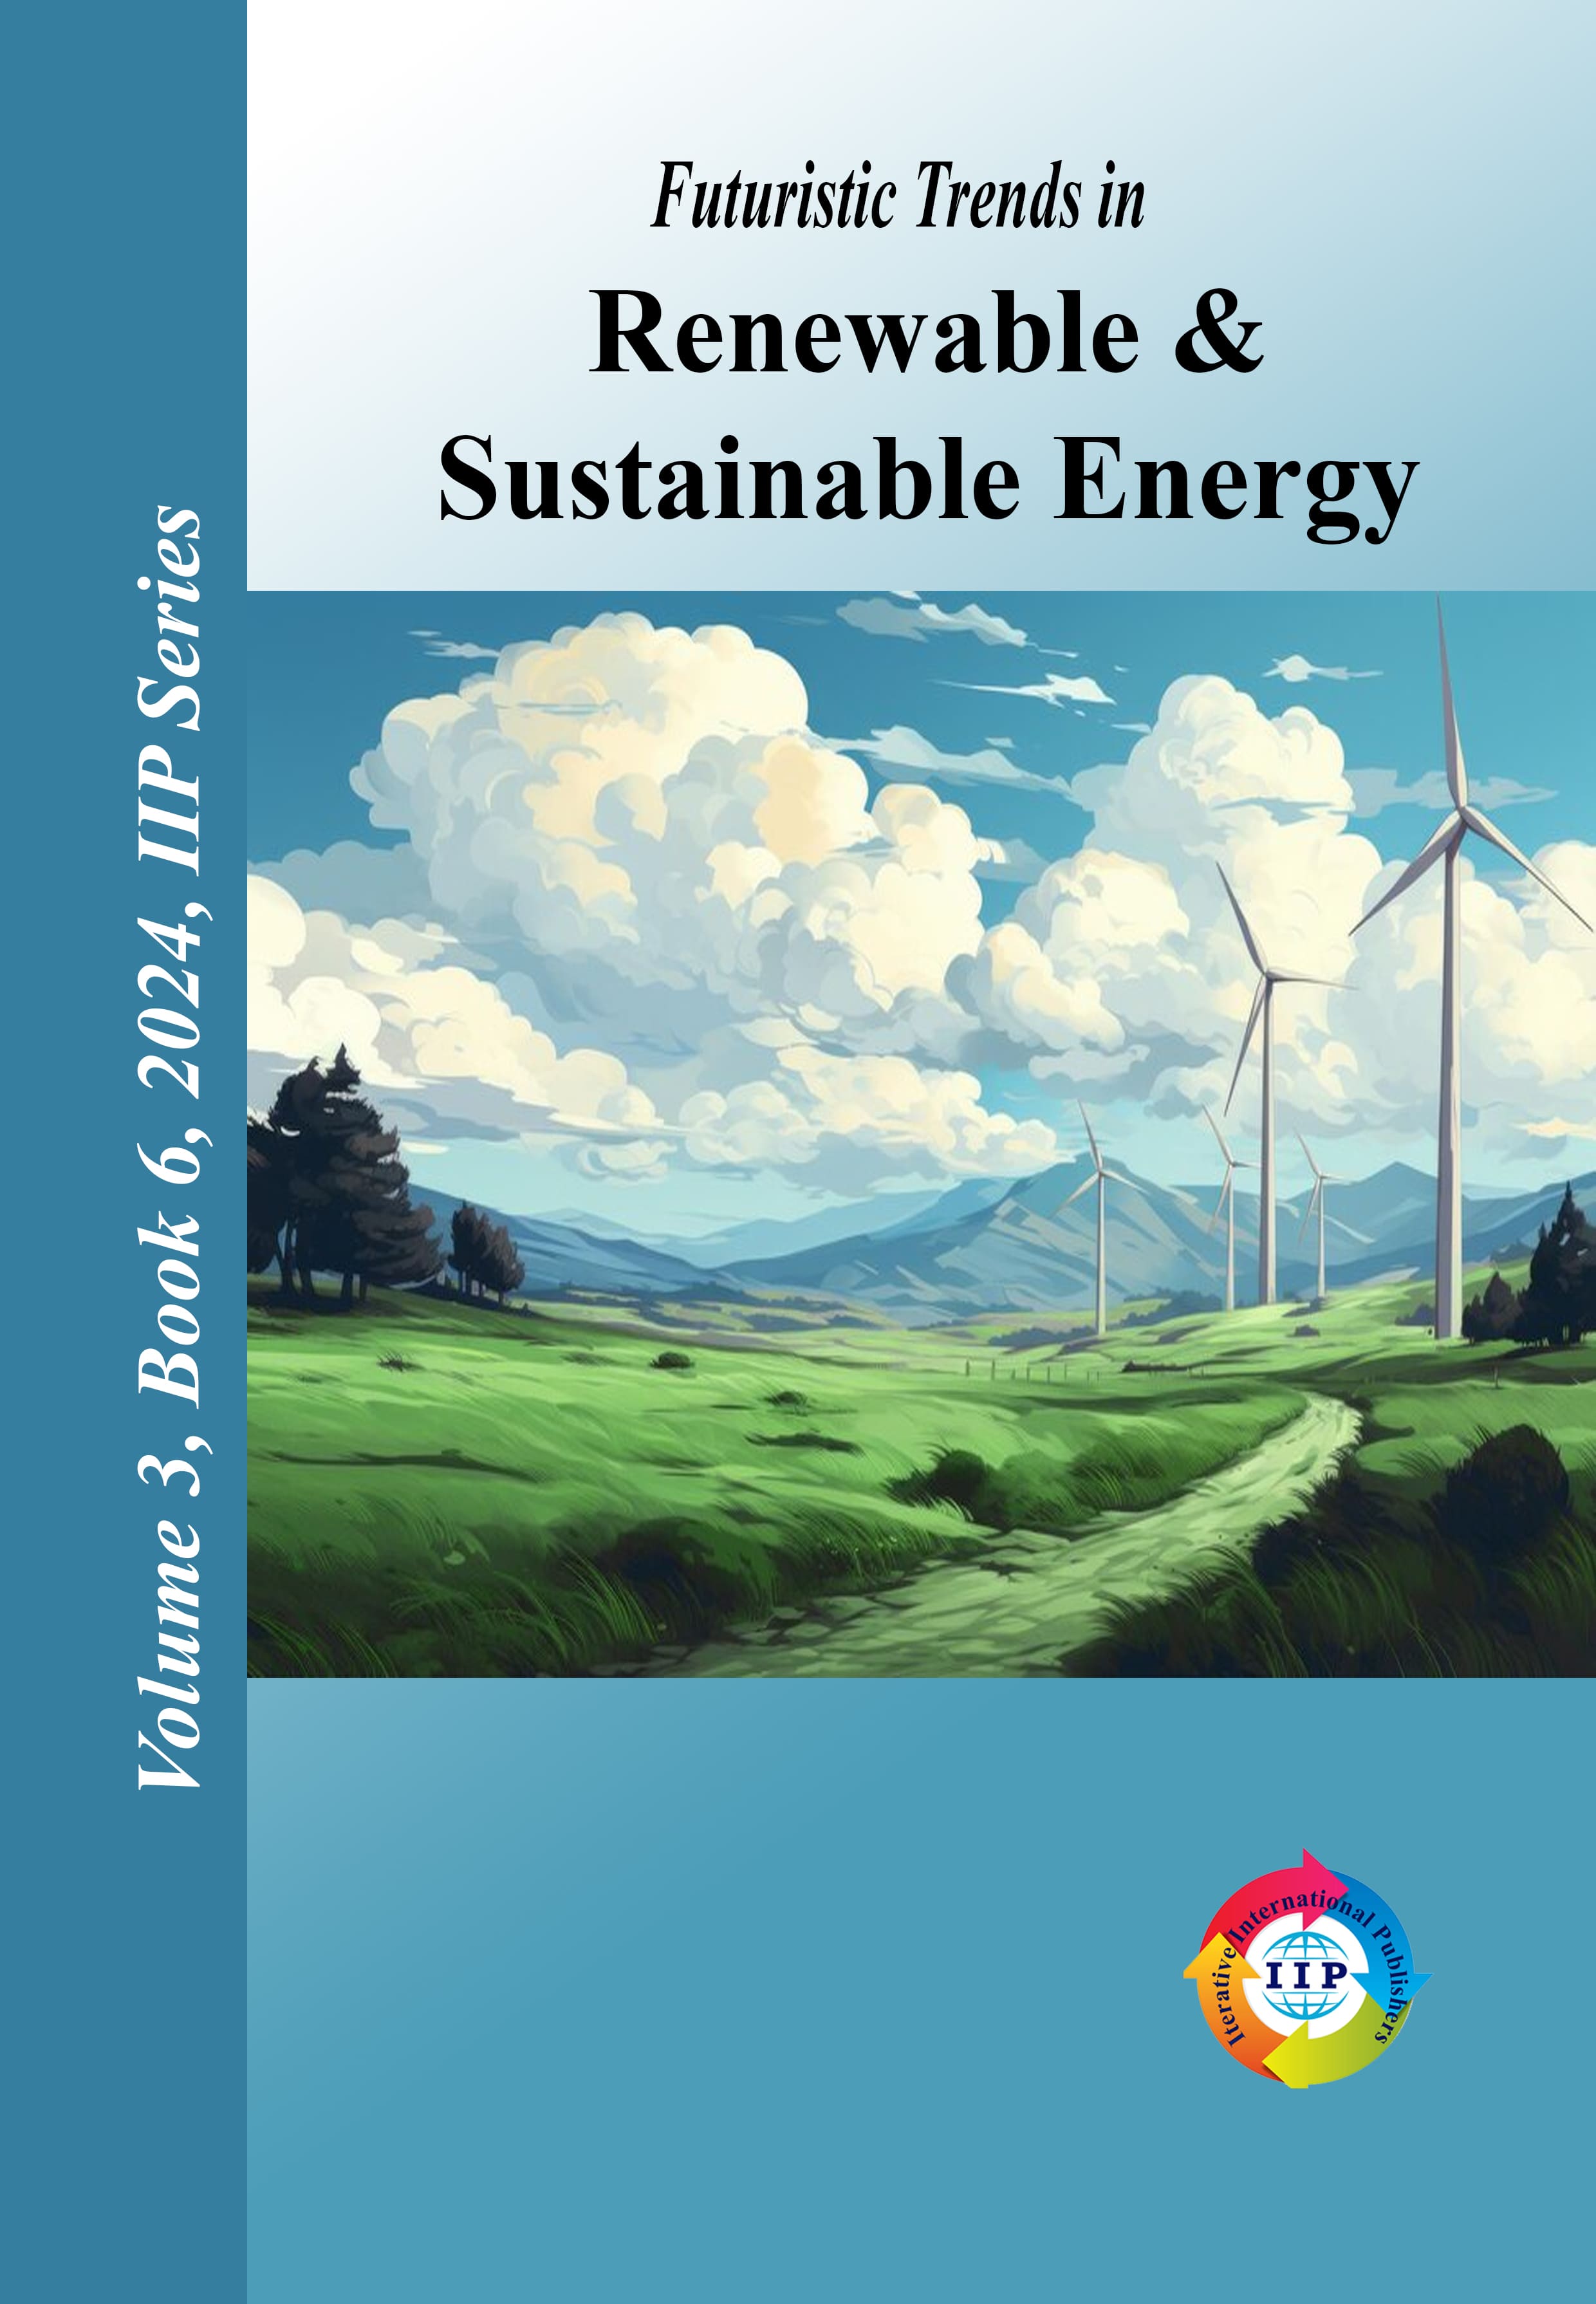 Futuristic Trends in Renewable & Sustainable Energy Volume 3 Book 6